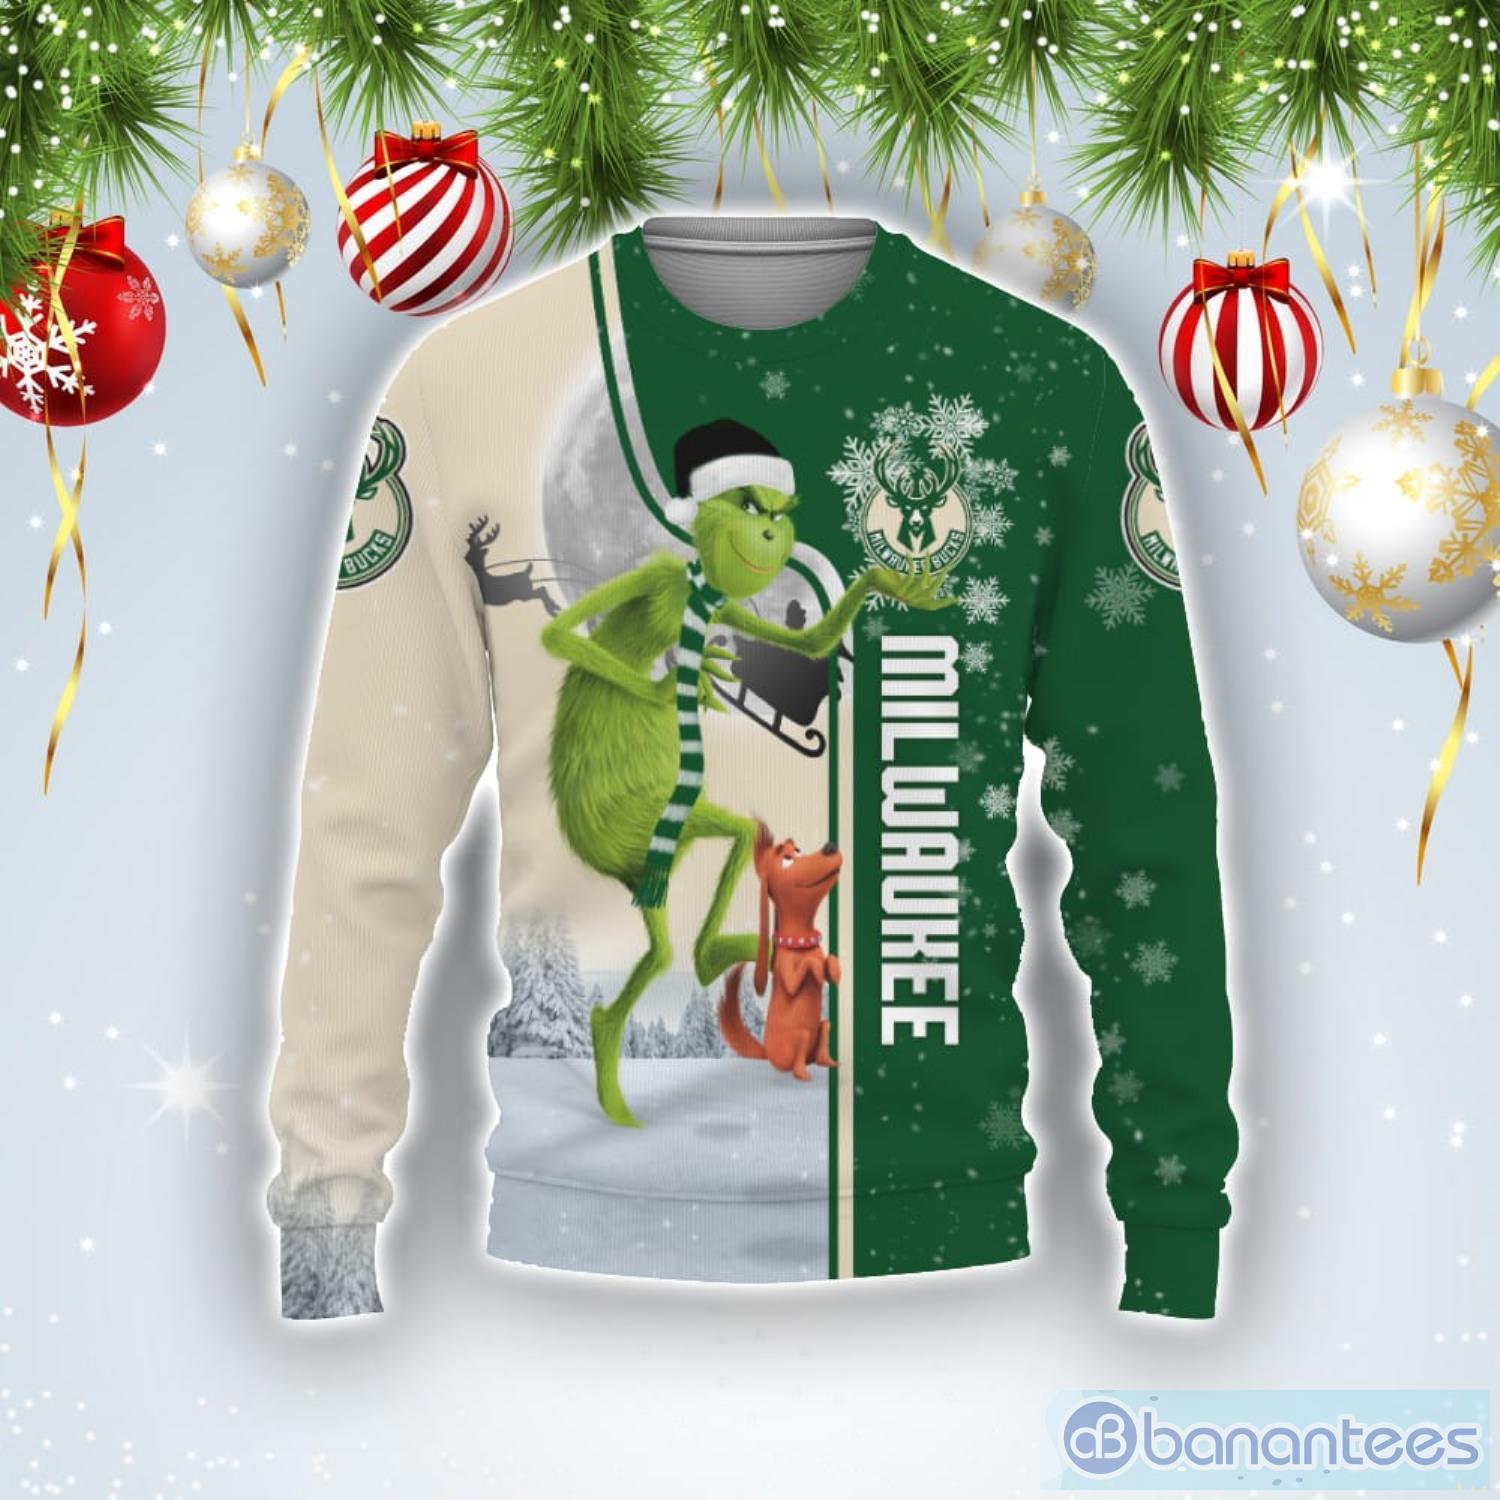 Milwaukee Bucks NBAFunny Grinch Ugly Christmas Sweater Product Photo 1